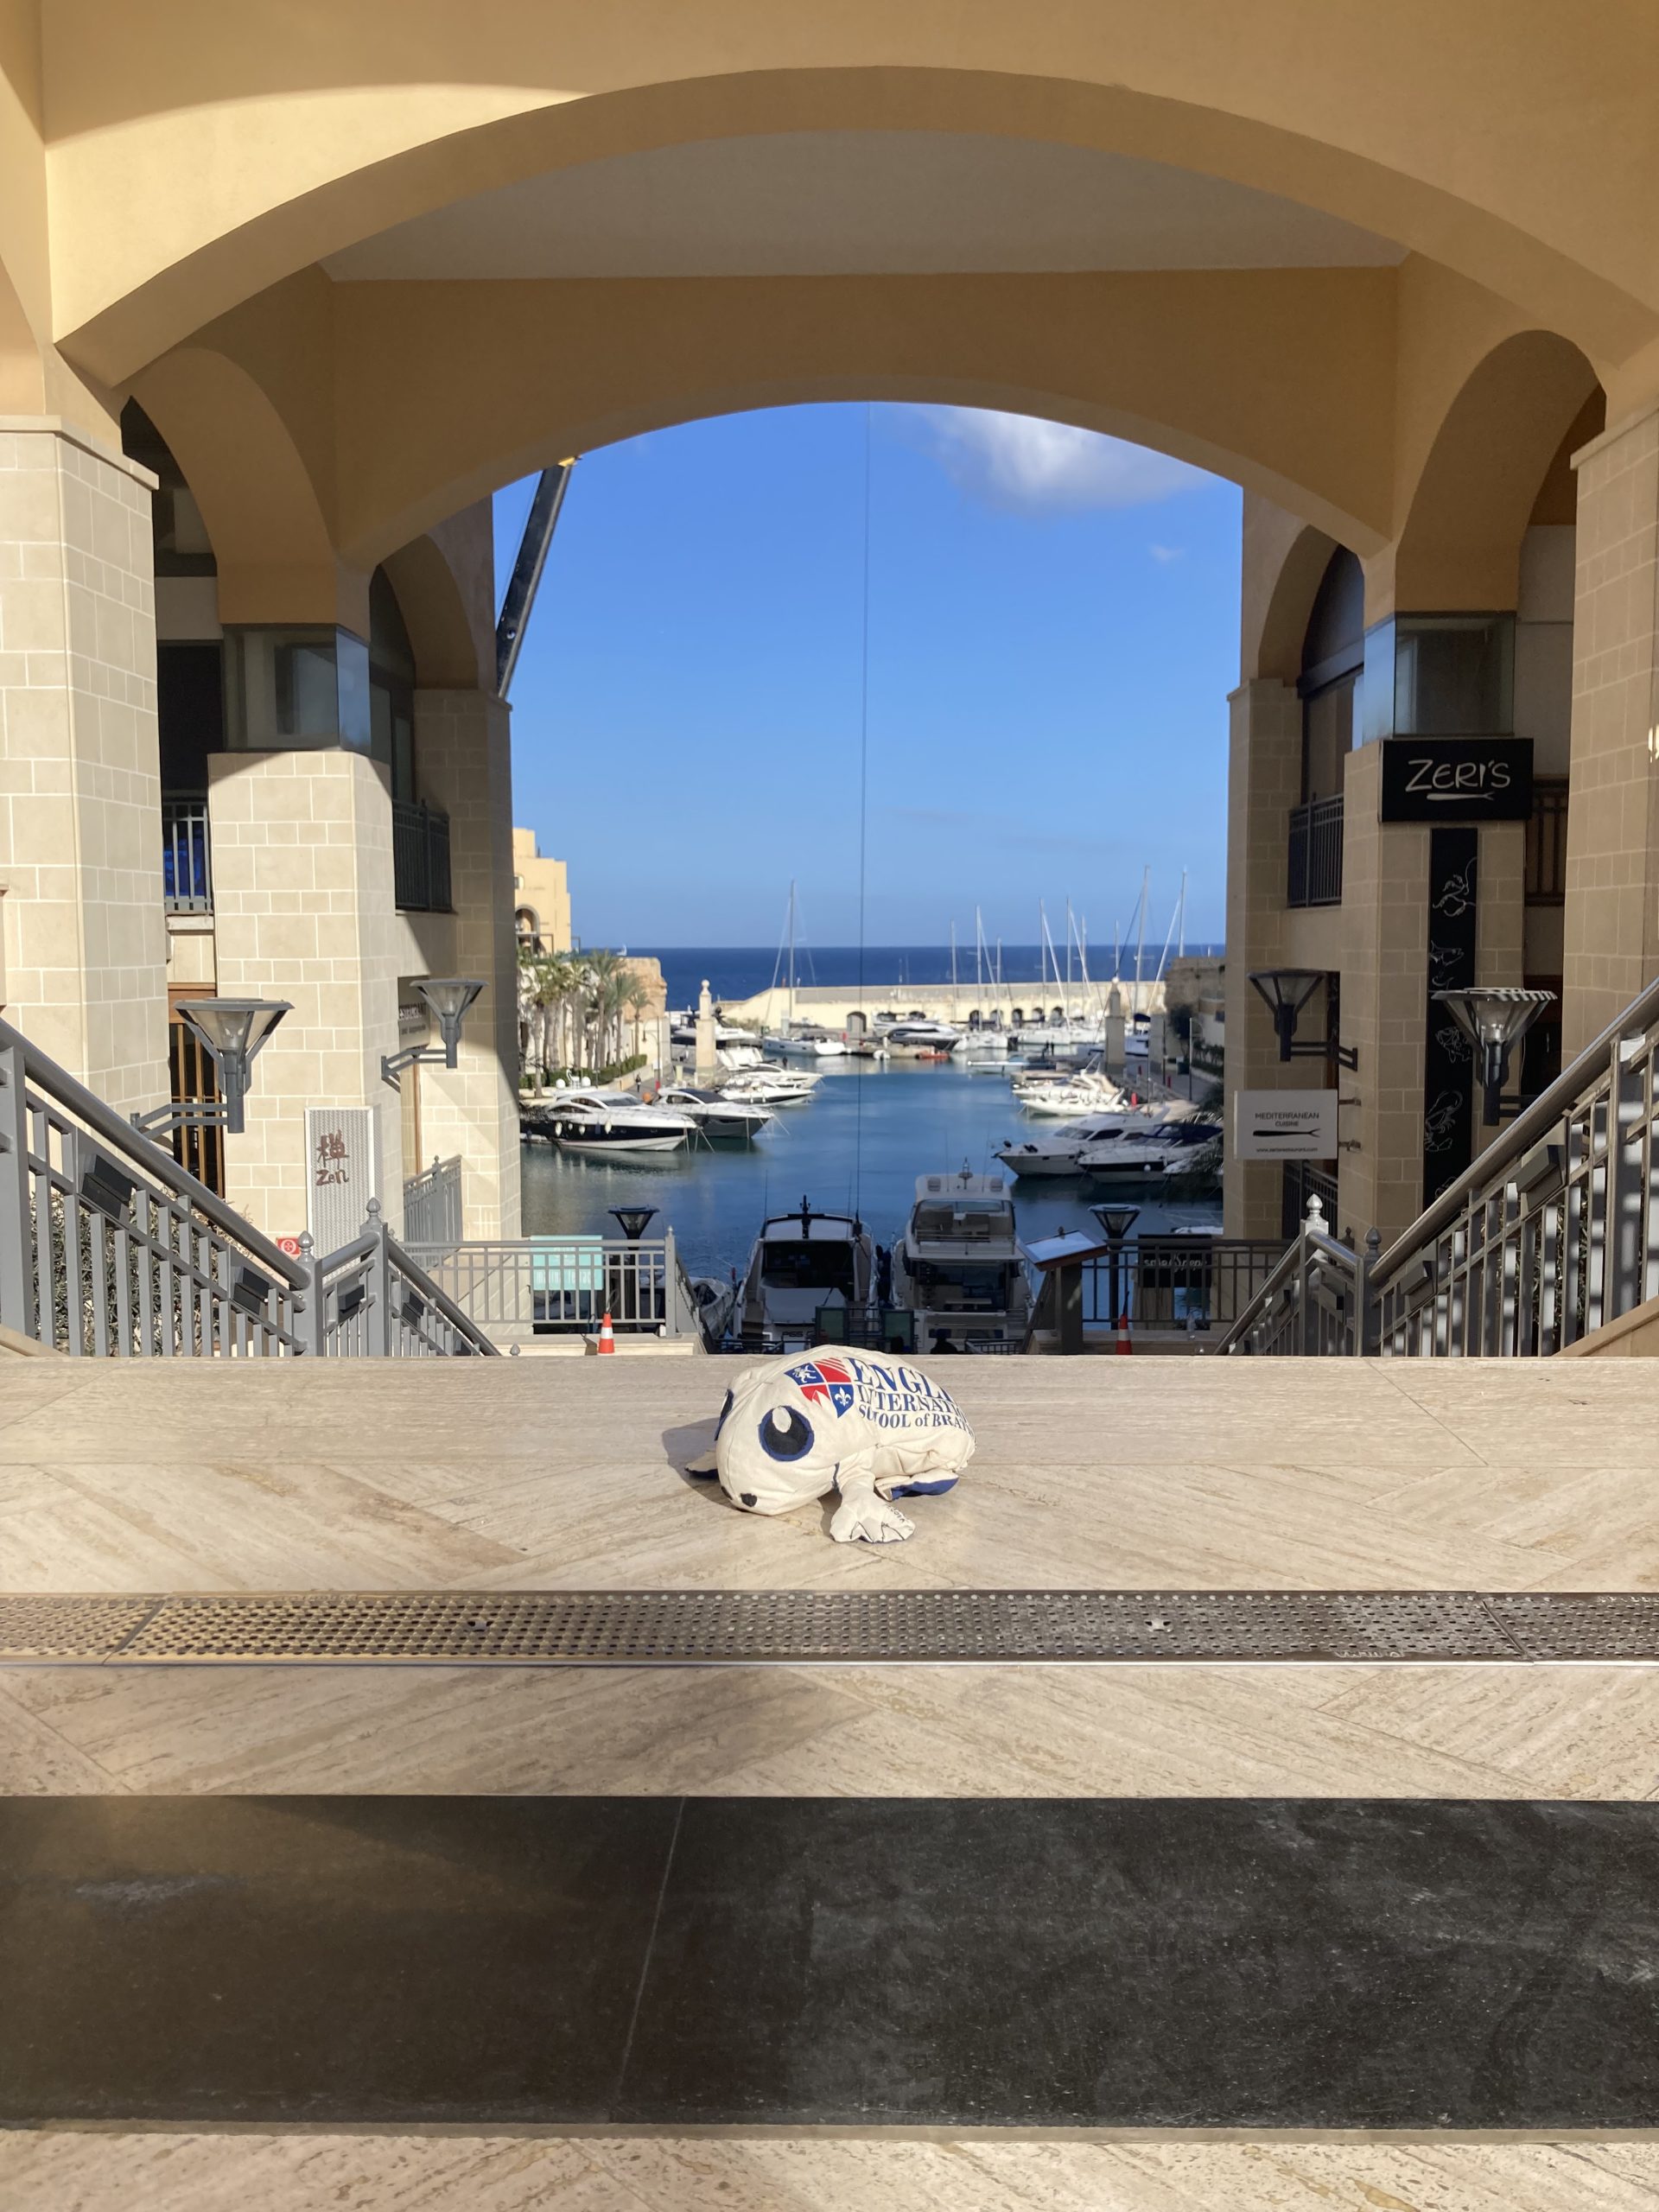 Giuseppe’s Travels: the Malta Experience